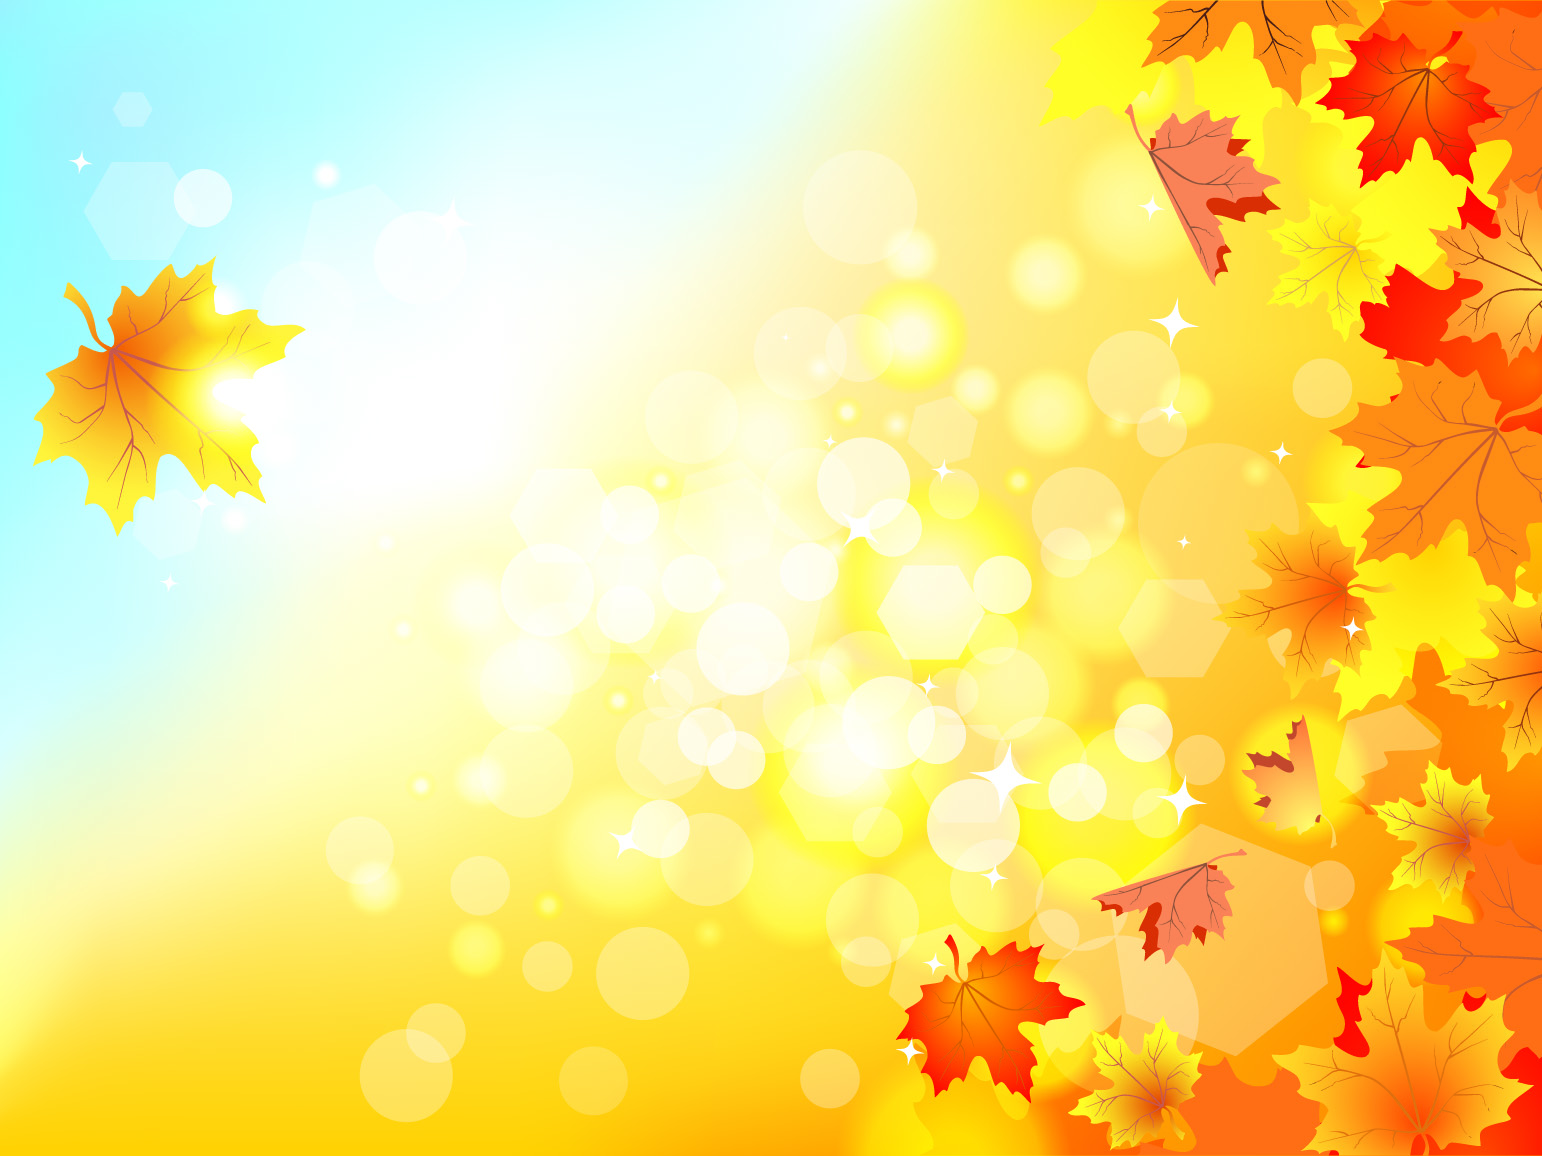 Autumn Leaf Background Vector